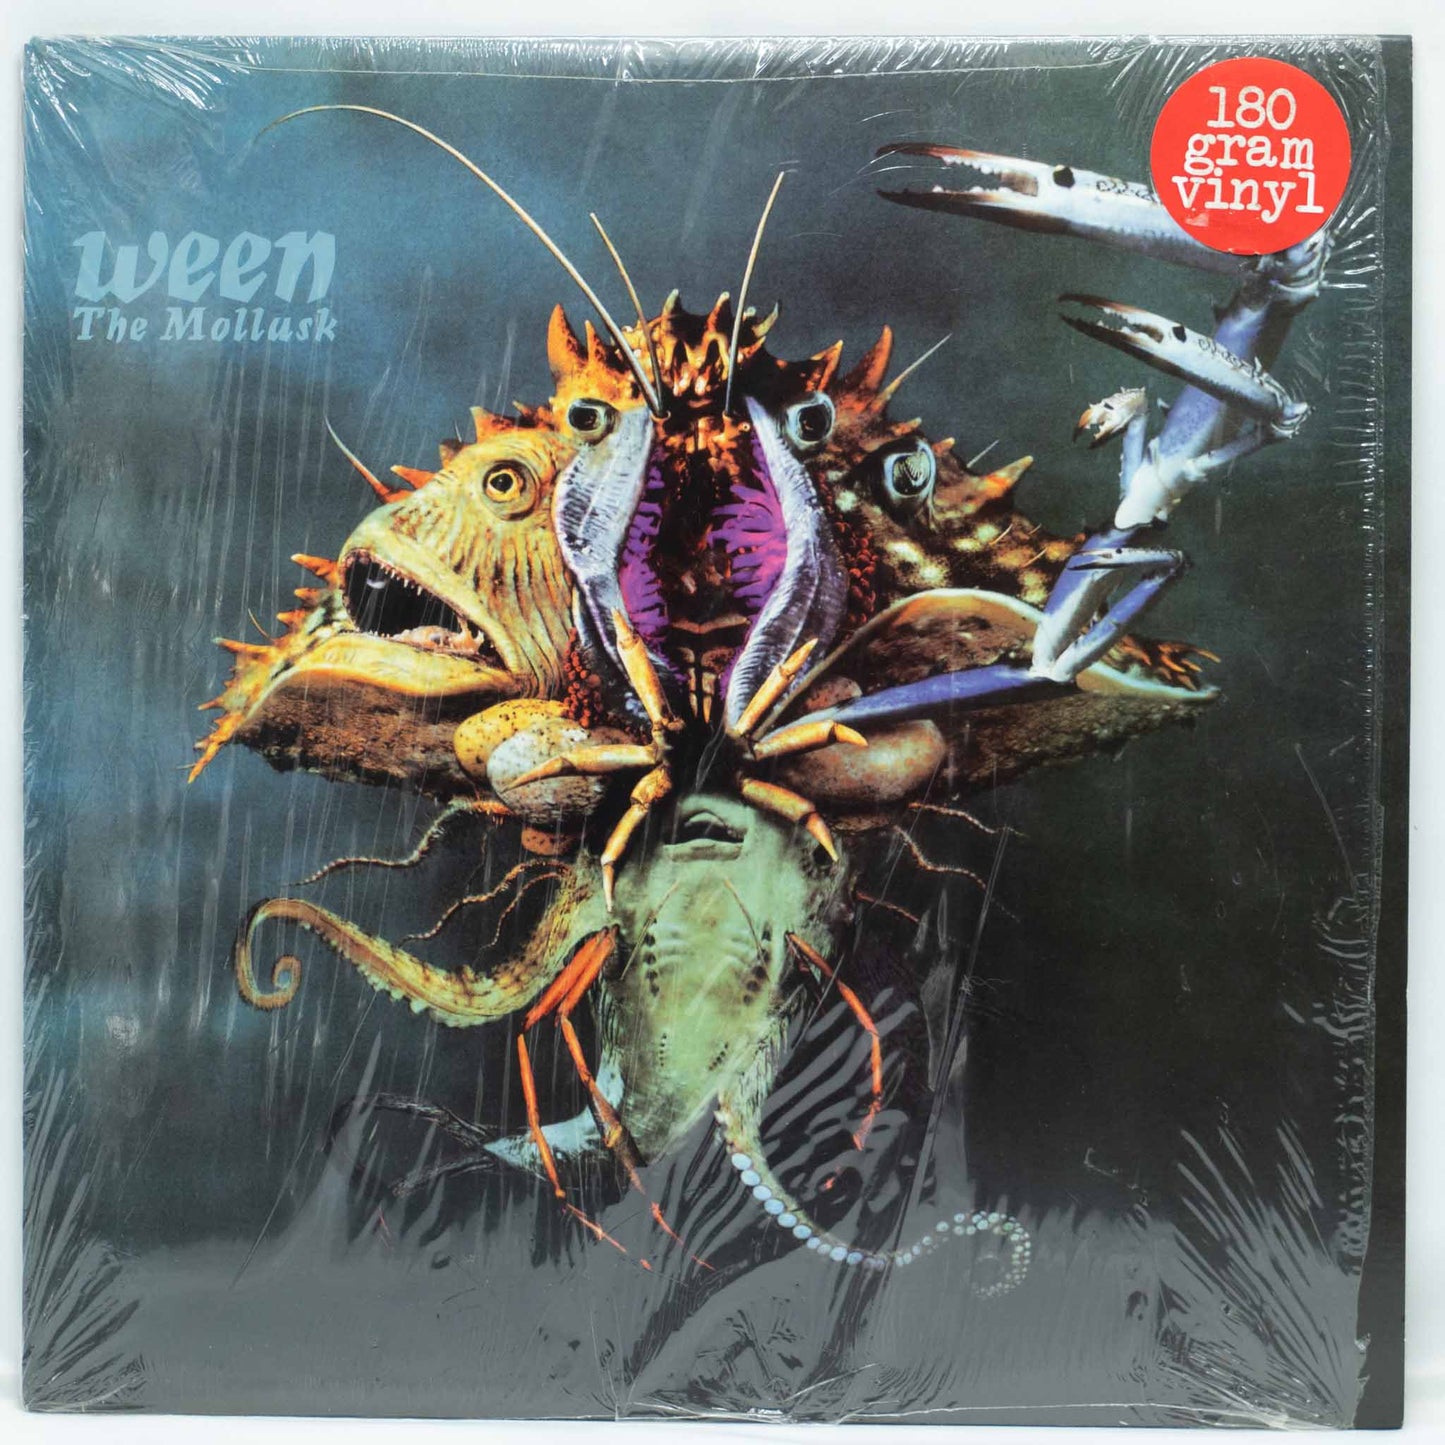 Ween – The Mollusk